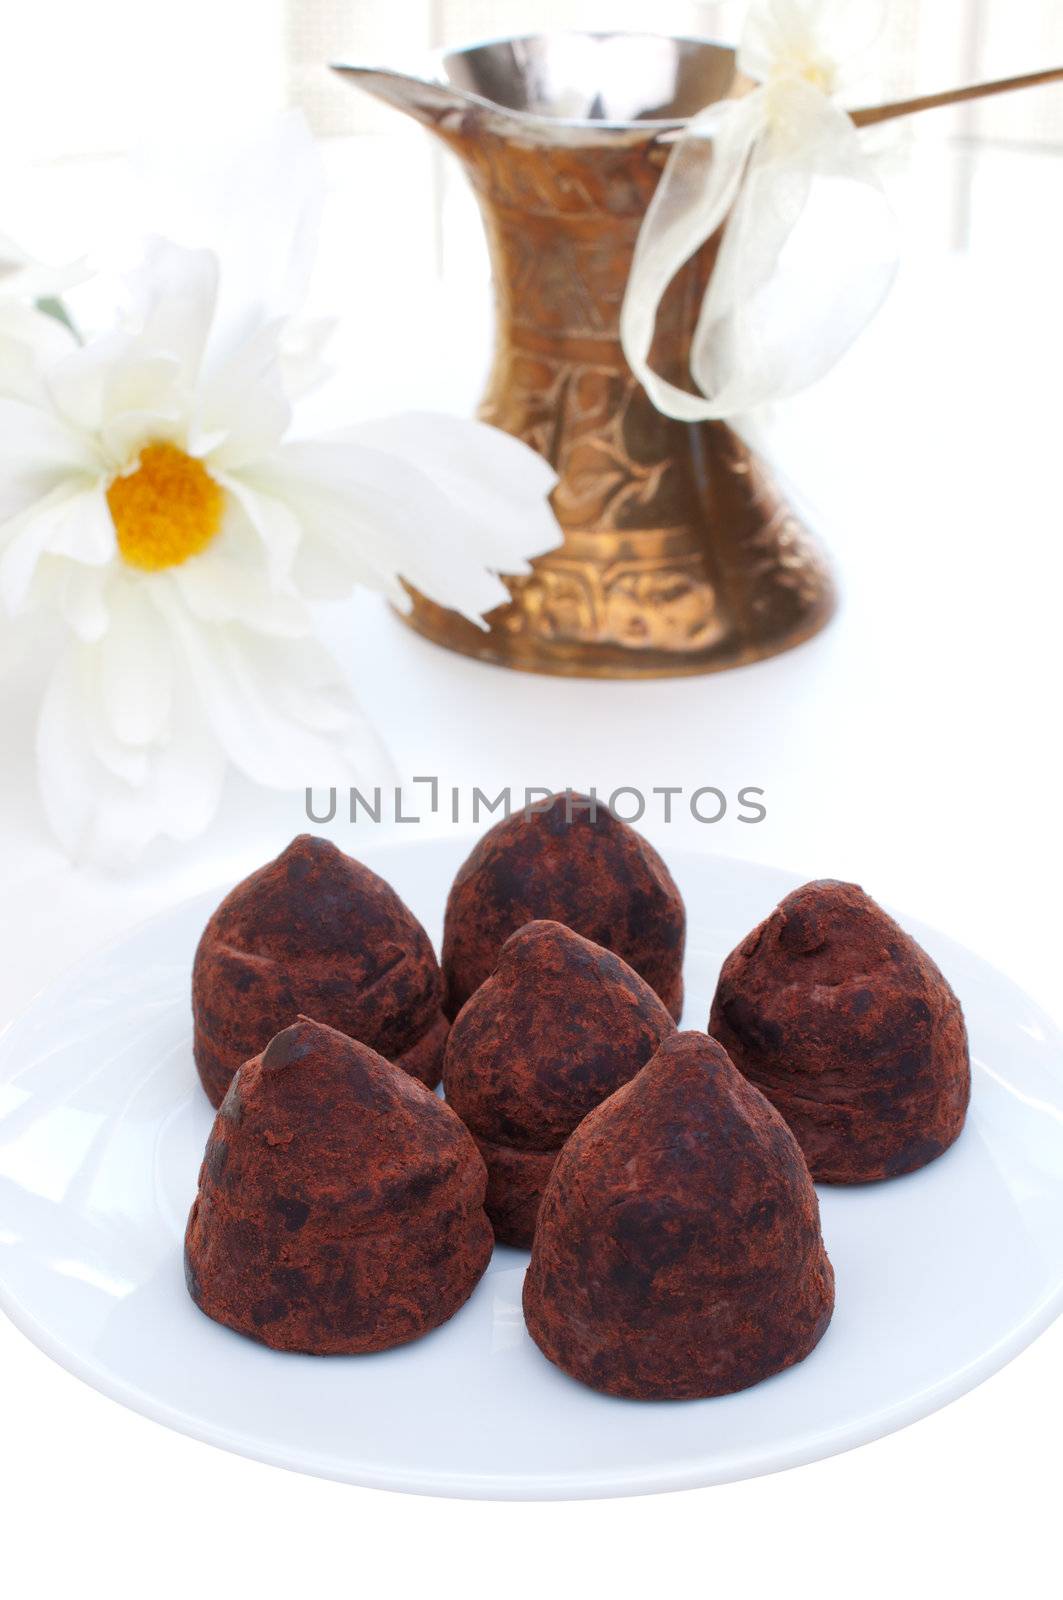 Six truffles on a plate  turish coffee pot on background